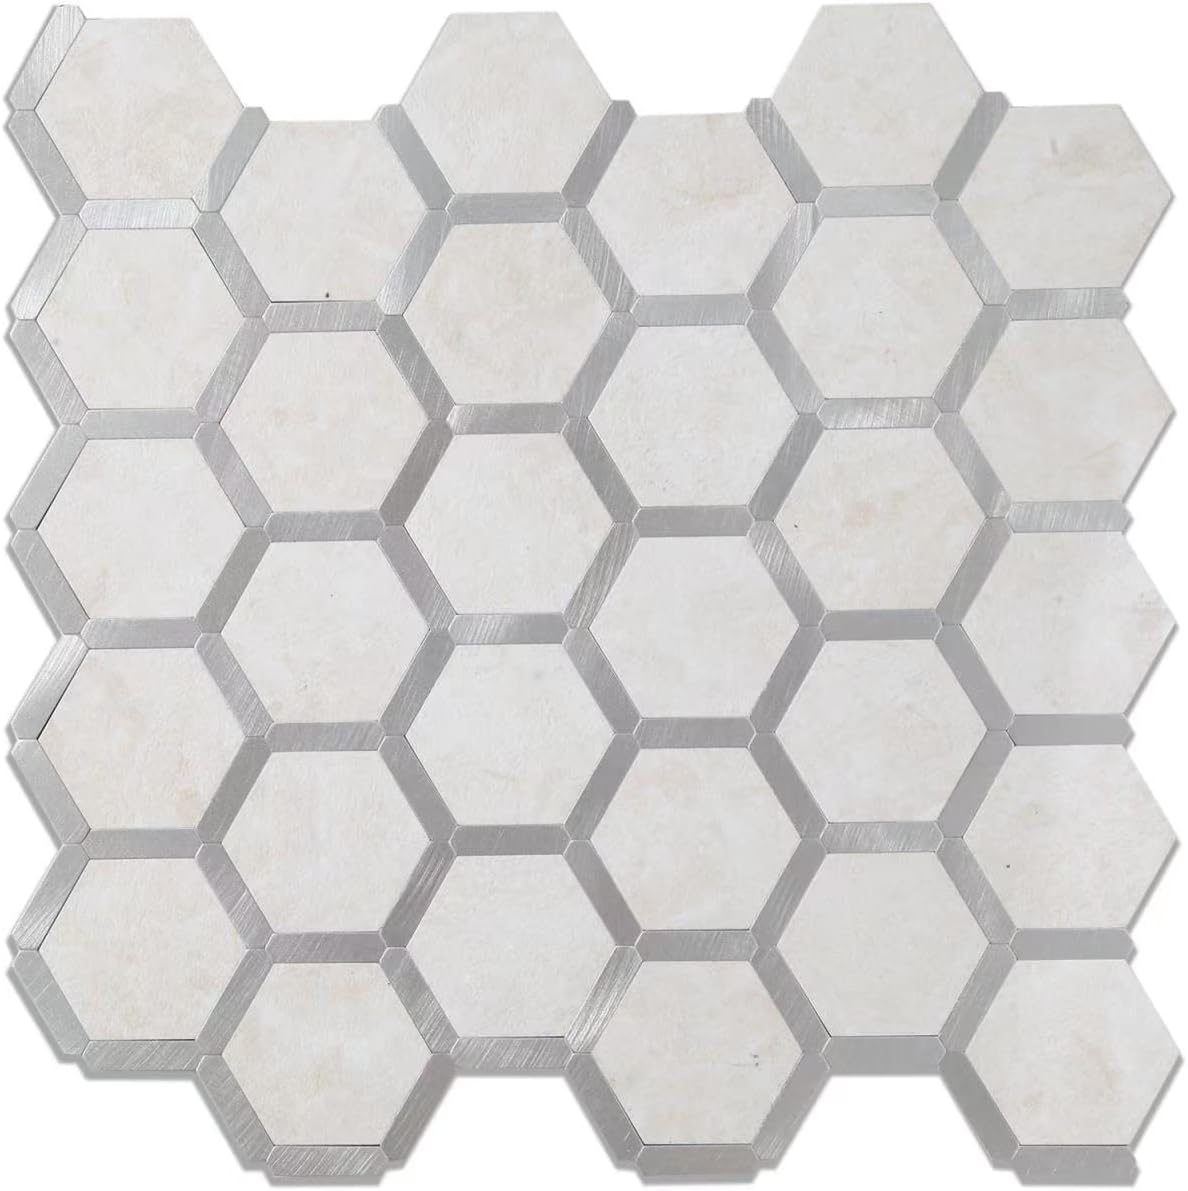 Hexagon metal stone blend tile backsplash in Creamy Stone main image